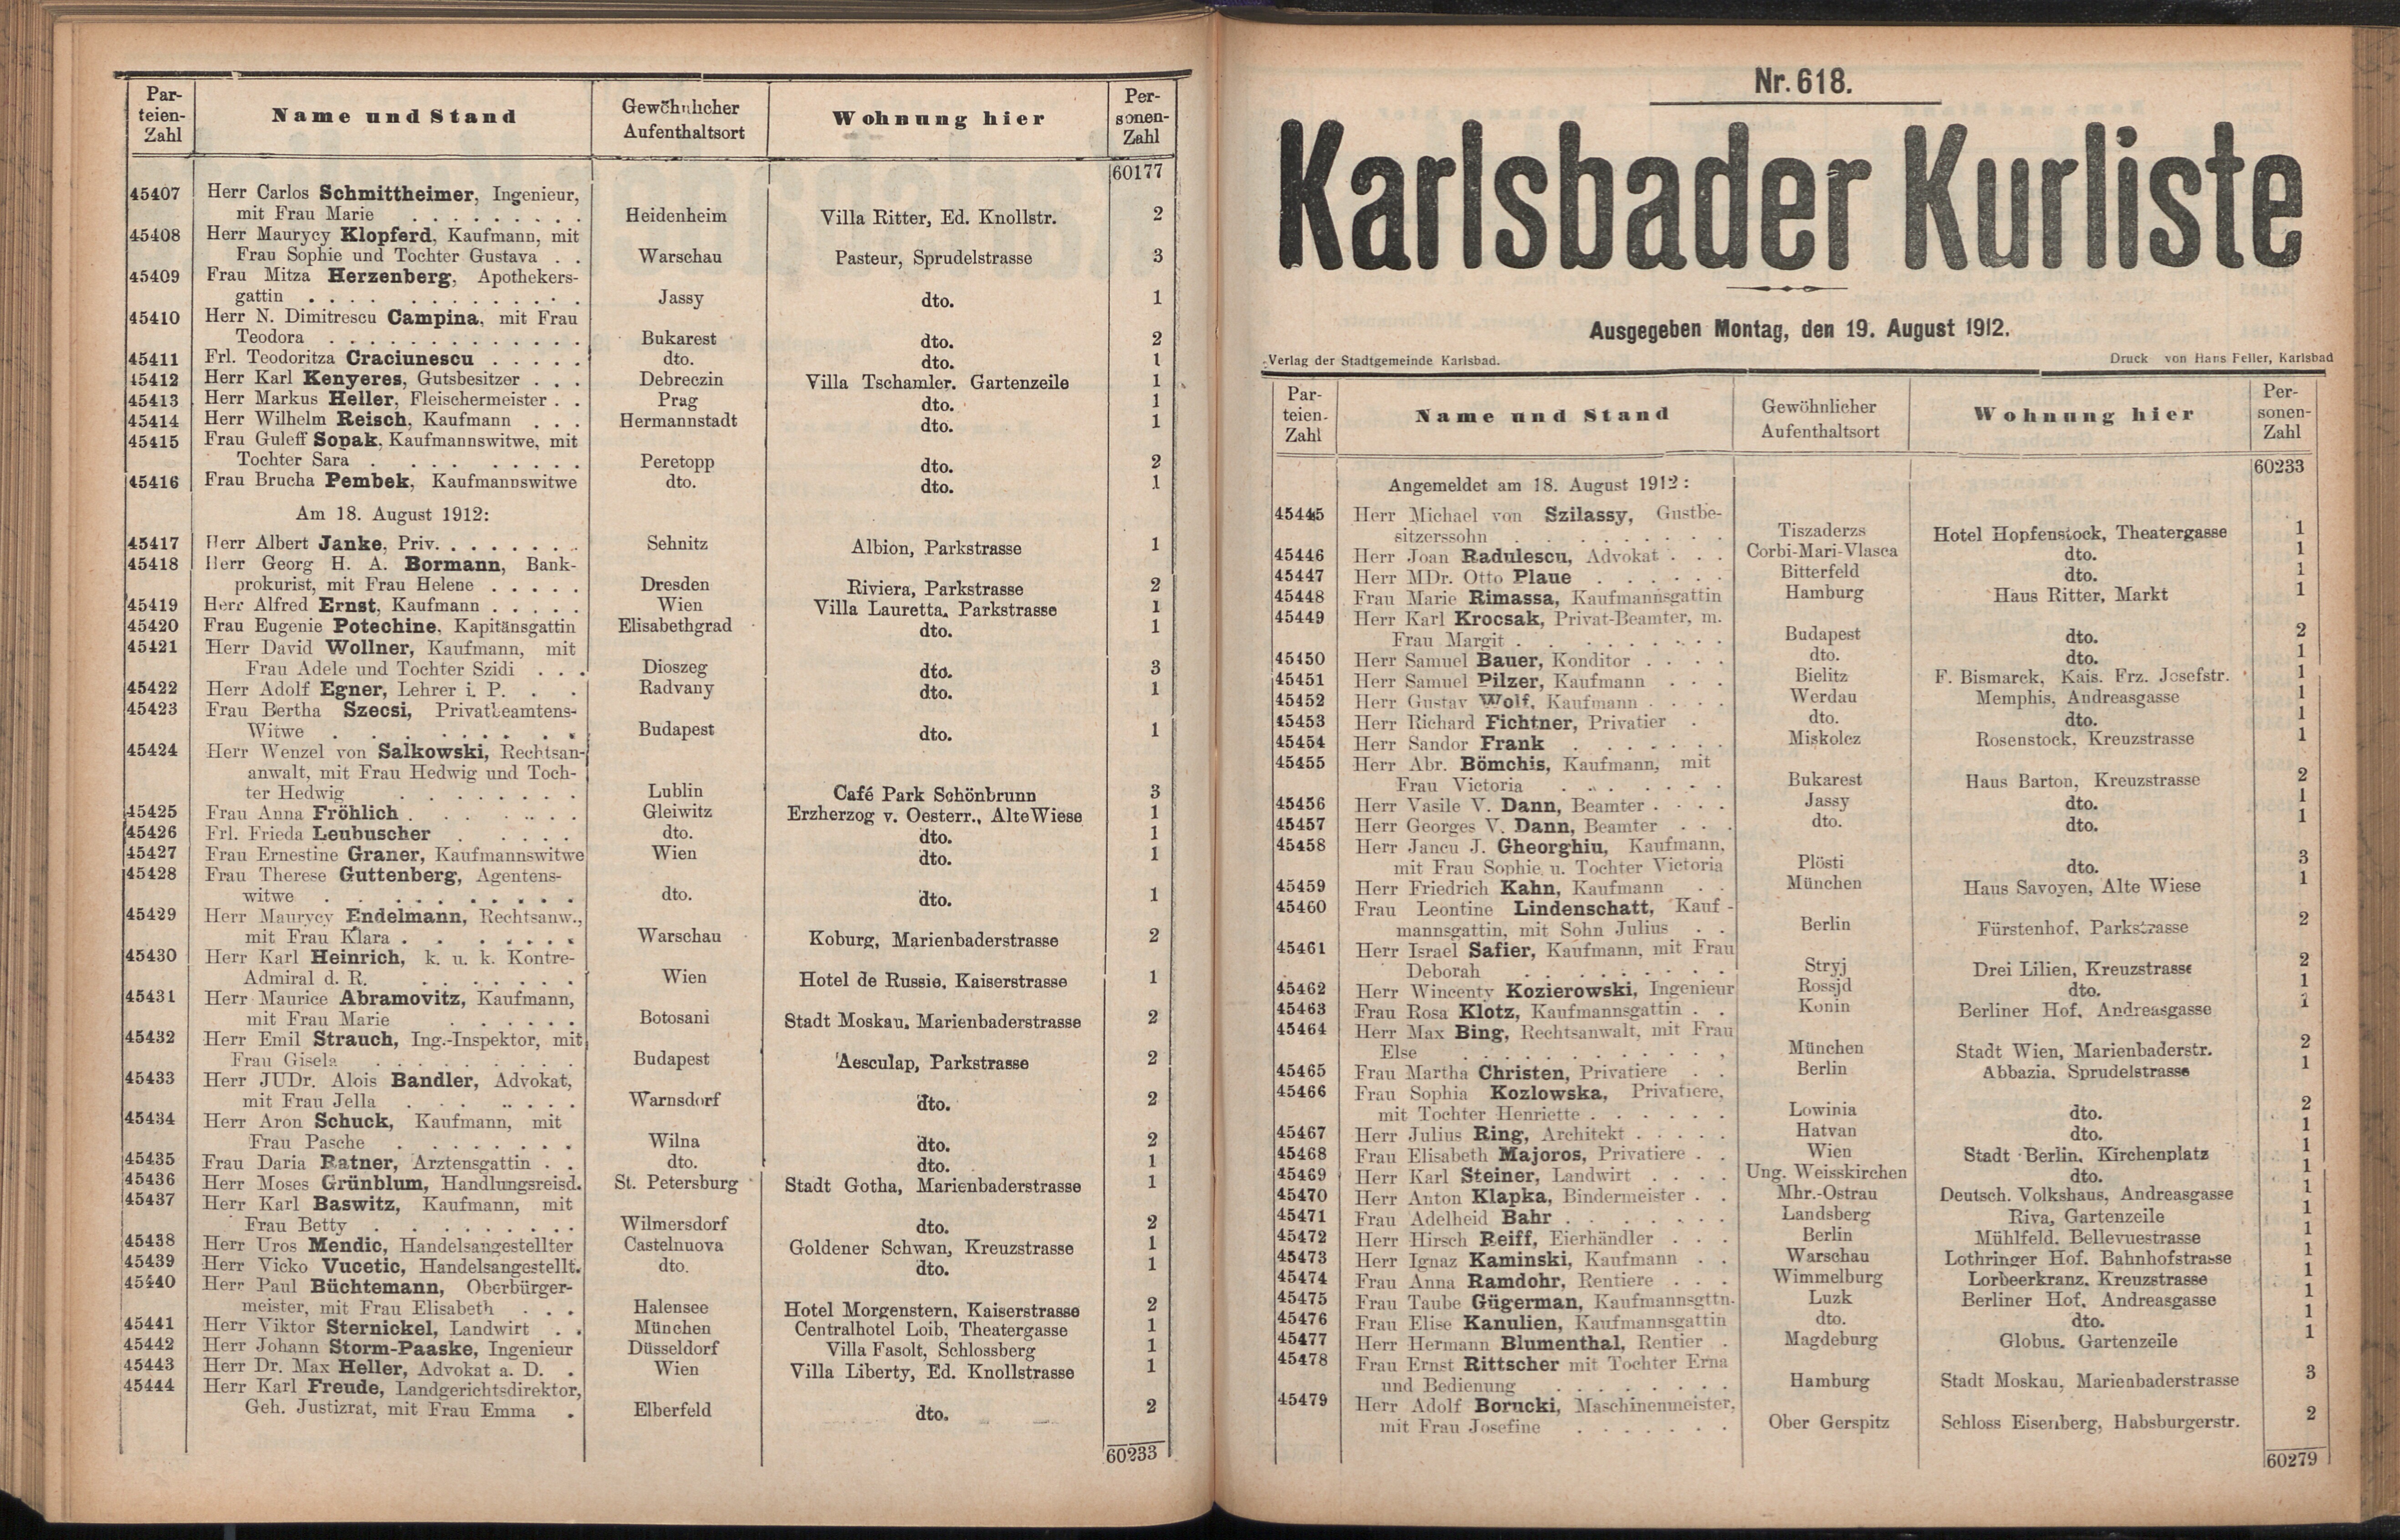 336. soap-kv_knihovna_karlsbader-kurliste-1912-2_3360